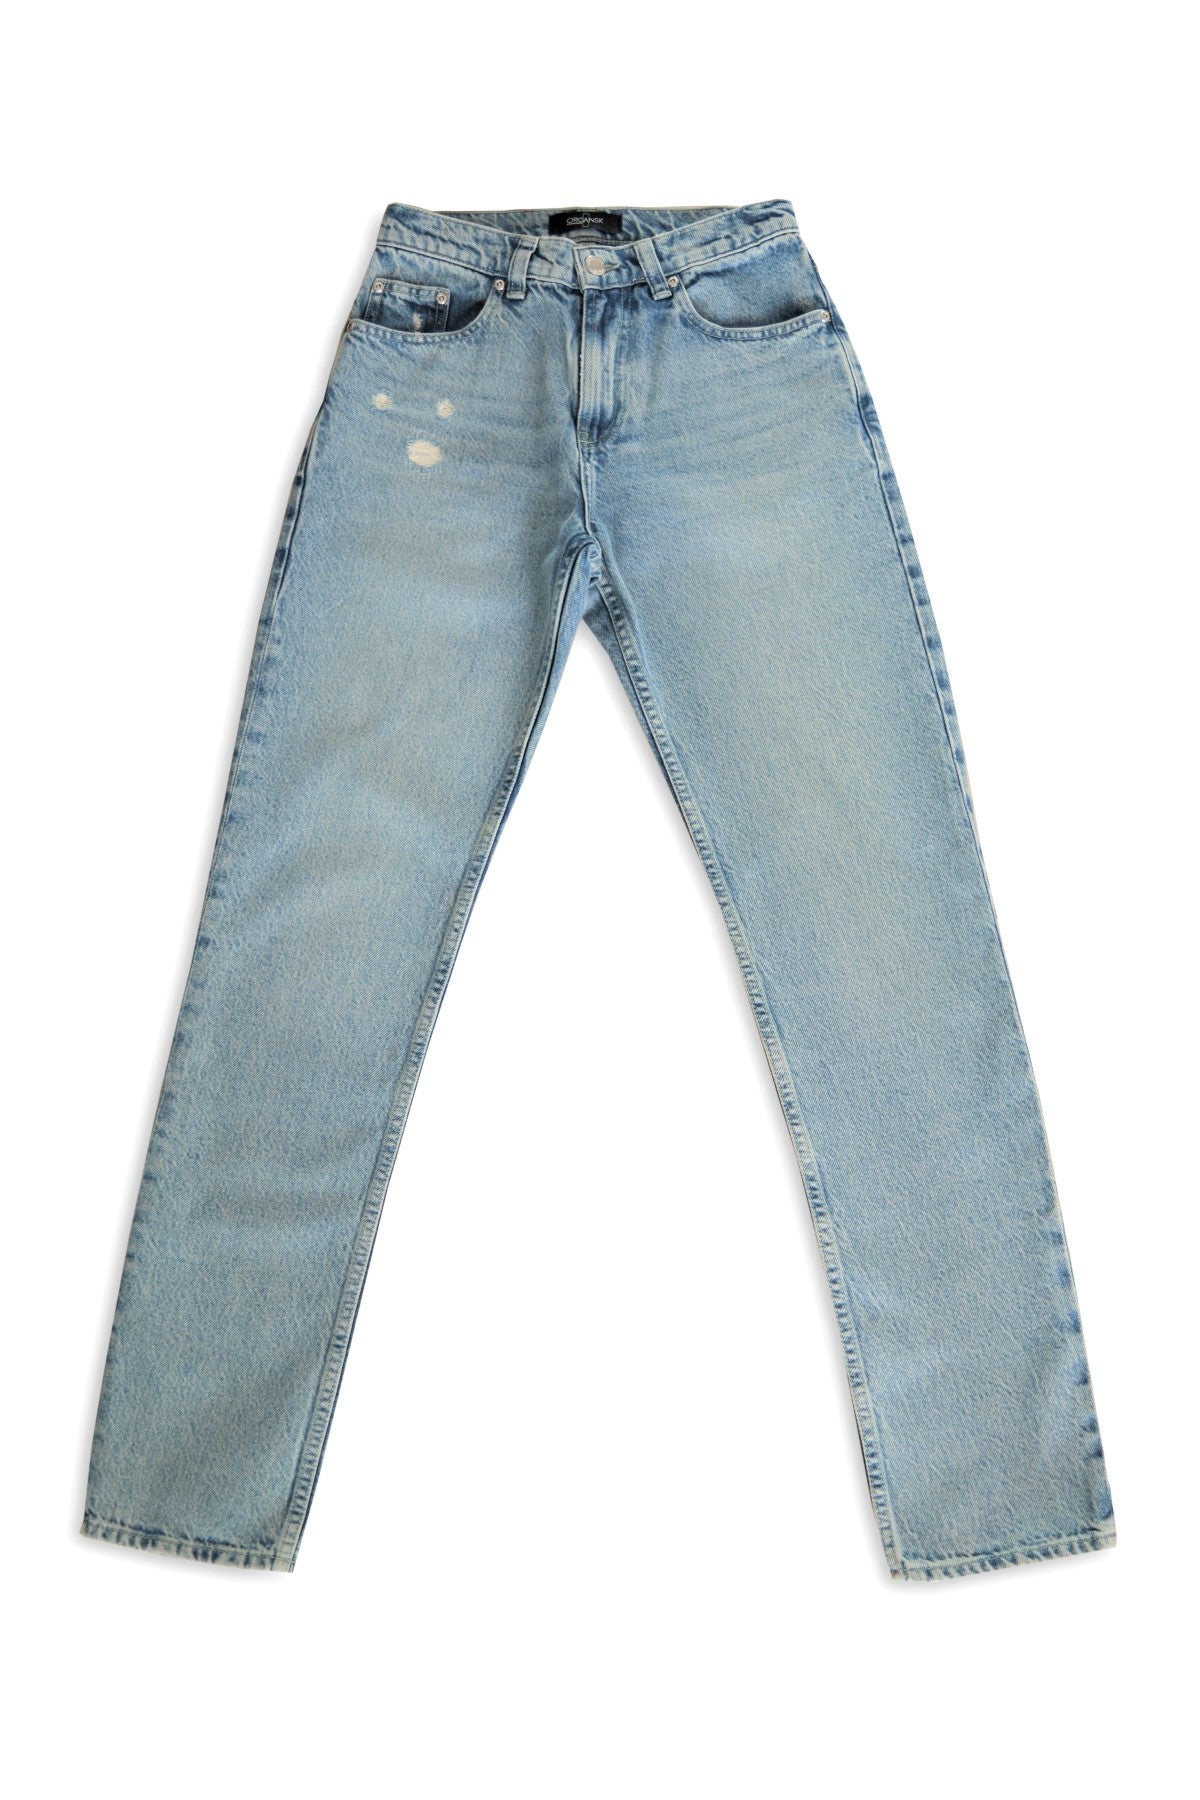 DG Lovely women's jeans, straight style. Dark blue co… | Drouot.com